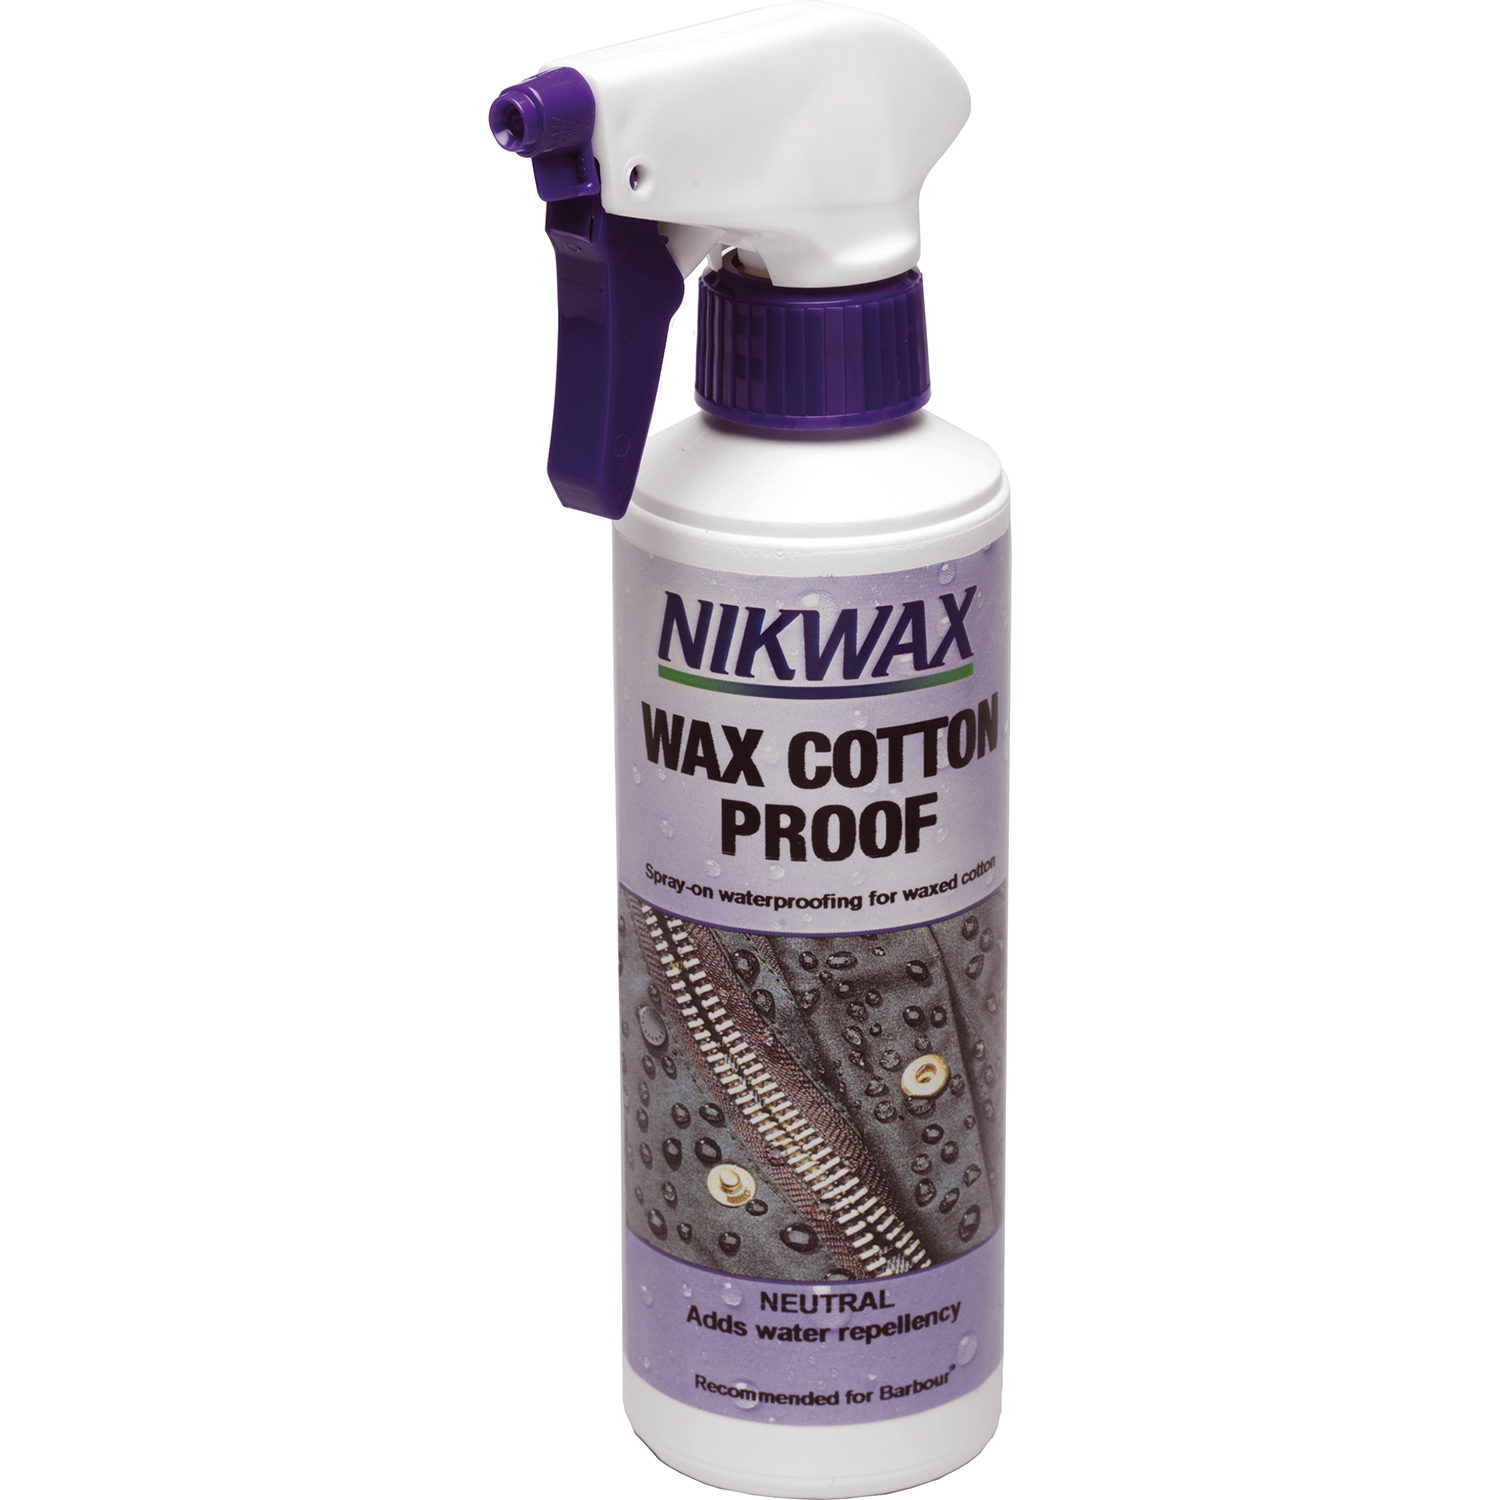 NIKWAX WAX COTTON PROOF NEUTRAL 300 ML SPRAY 300 ML